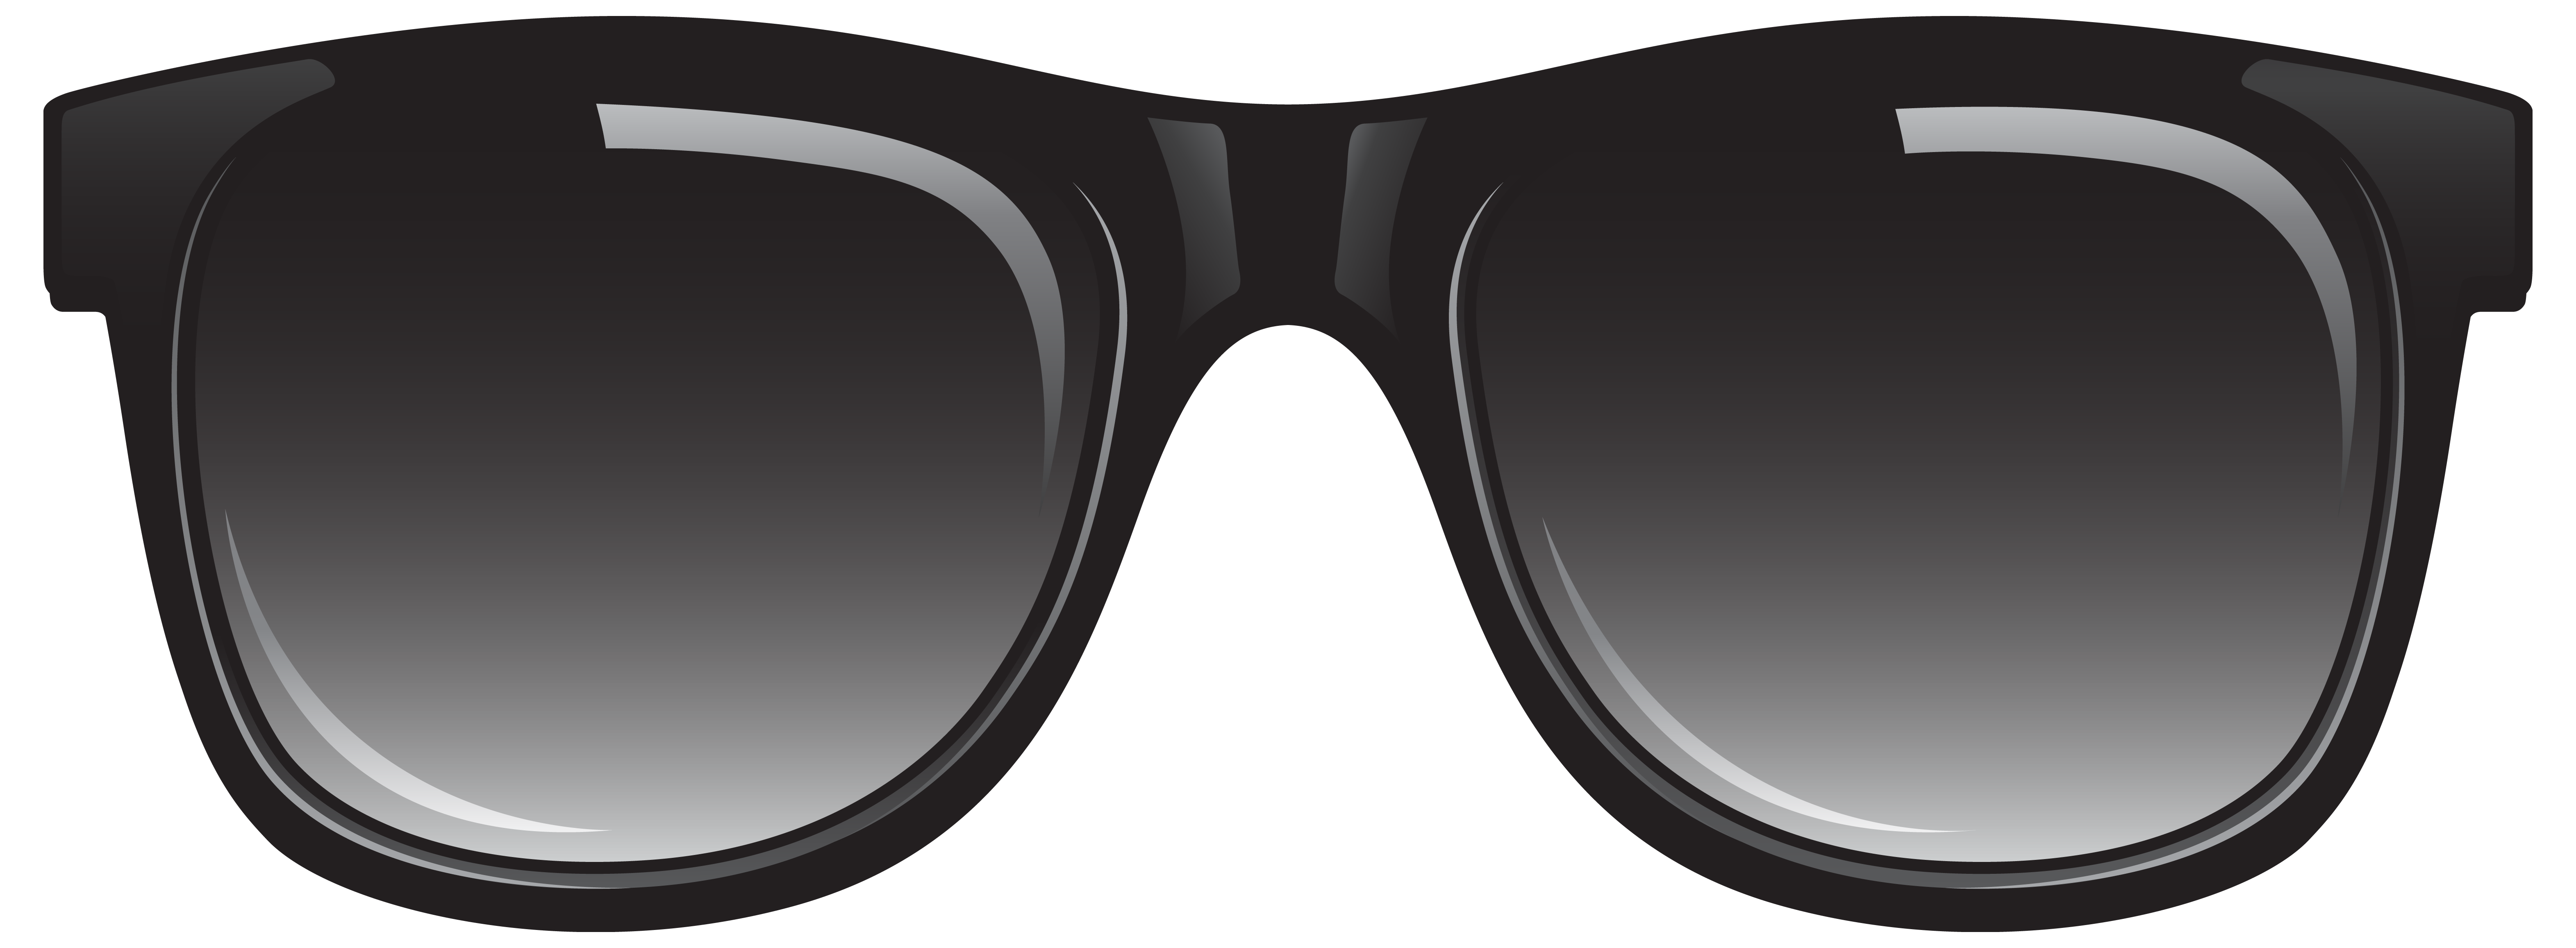 Sunglasses File PNG Image